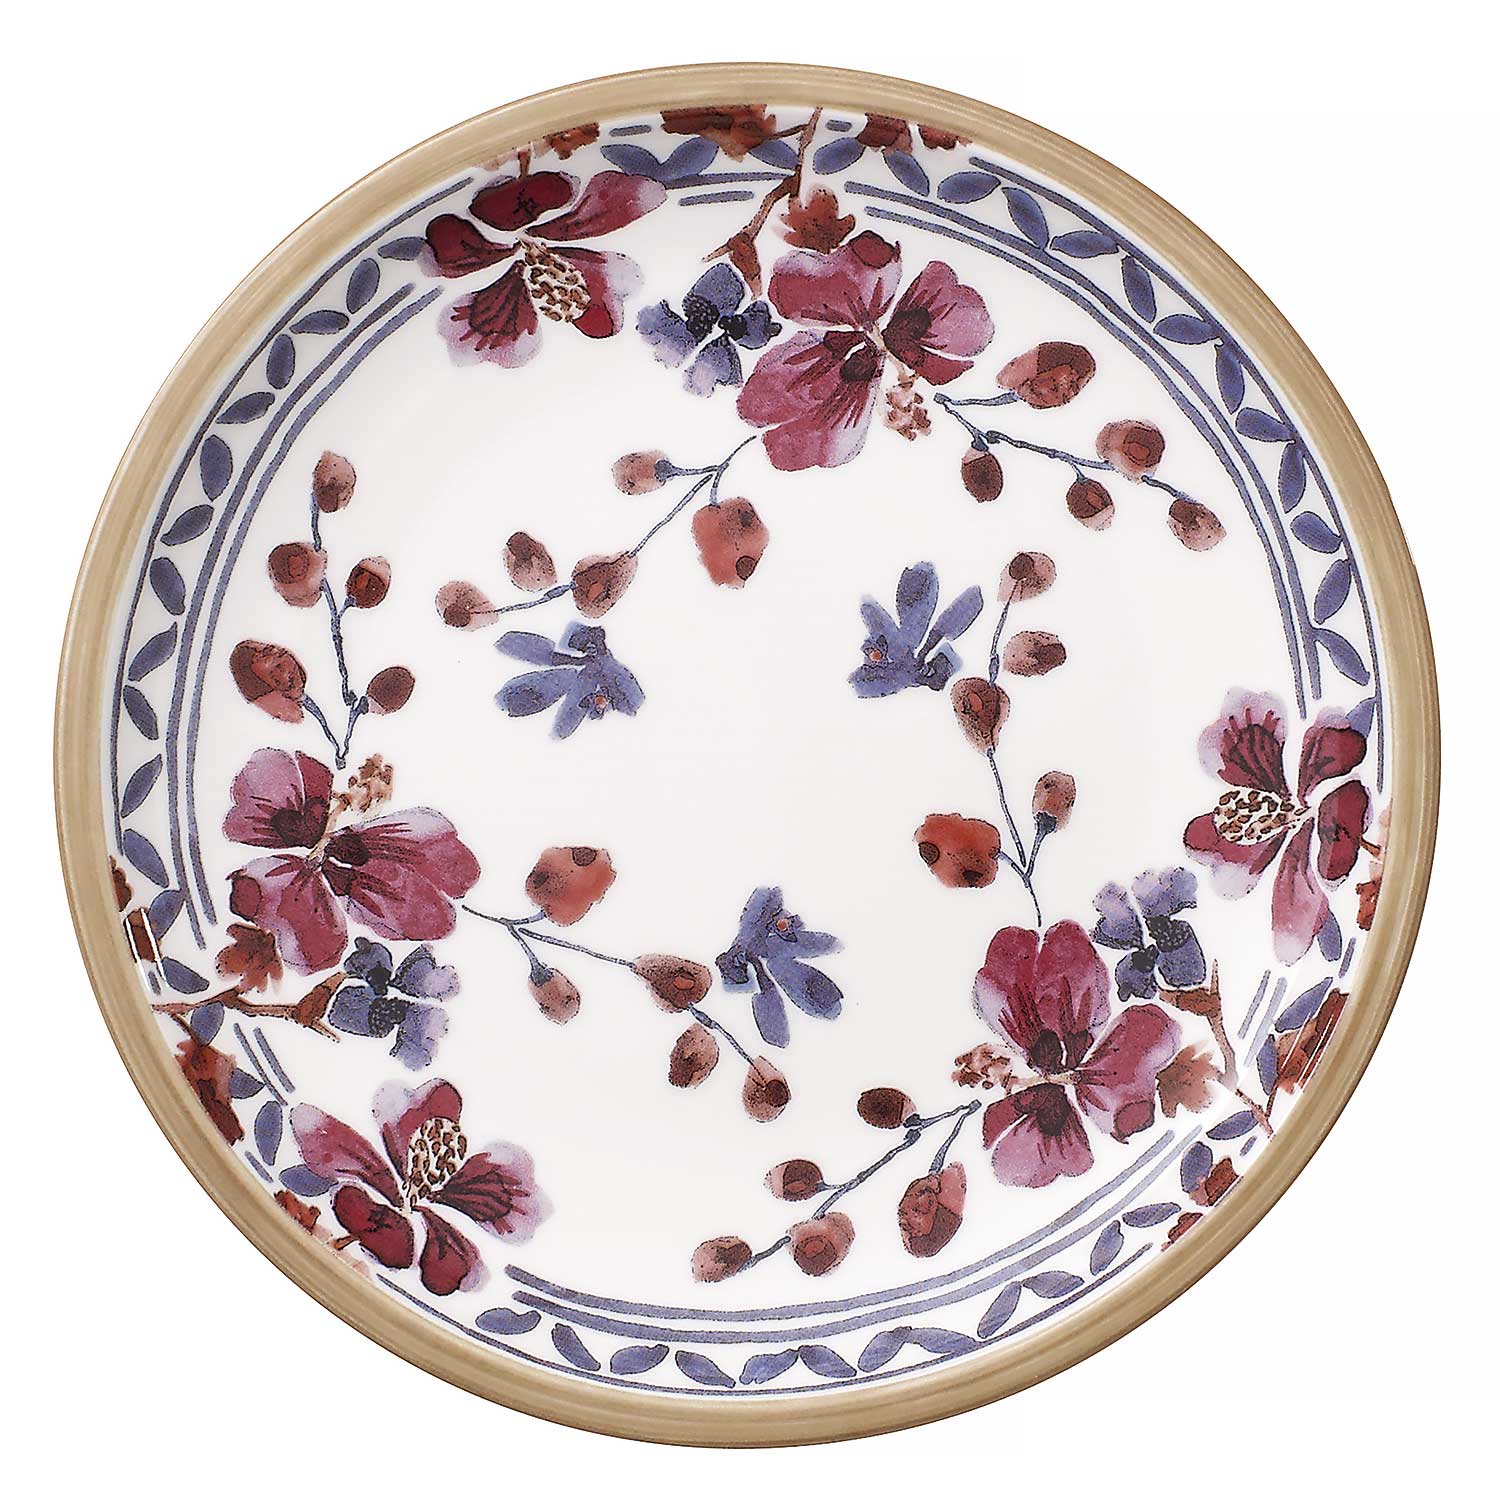 Пирожковая тарелка 16см, Artesano Provencal Lavender
https://spb.v-b.ru
г.Санкт-Петербург
eshop@v-b.spb.ru
+7(812)3801977